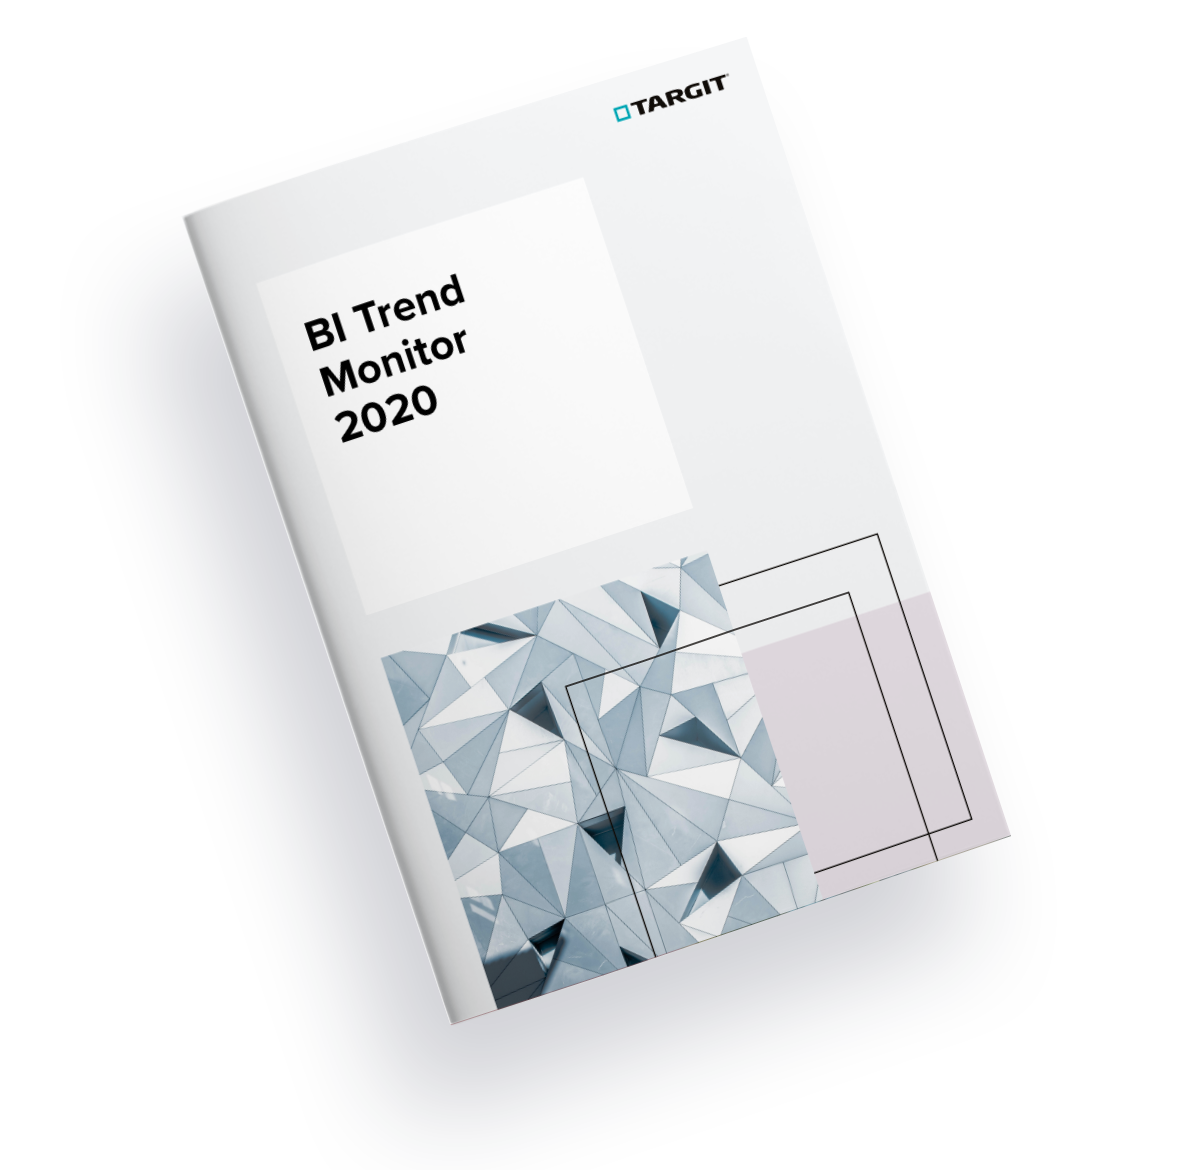 BI trend monitor 2020 cover